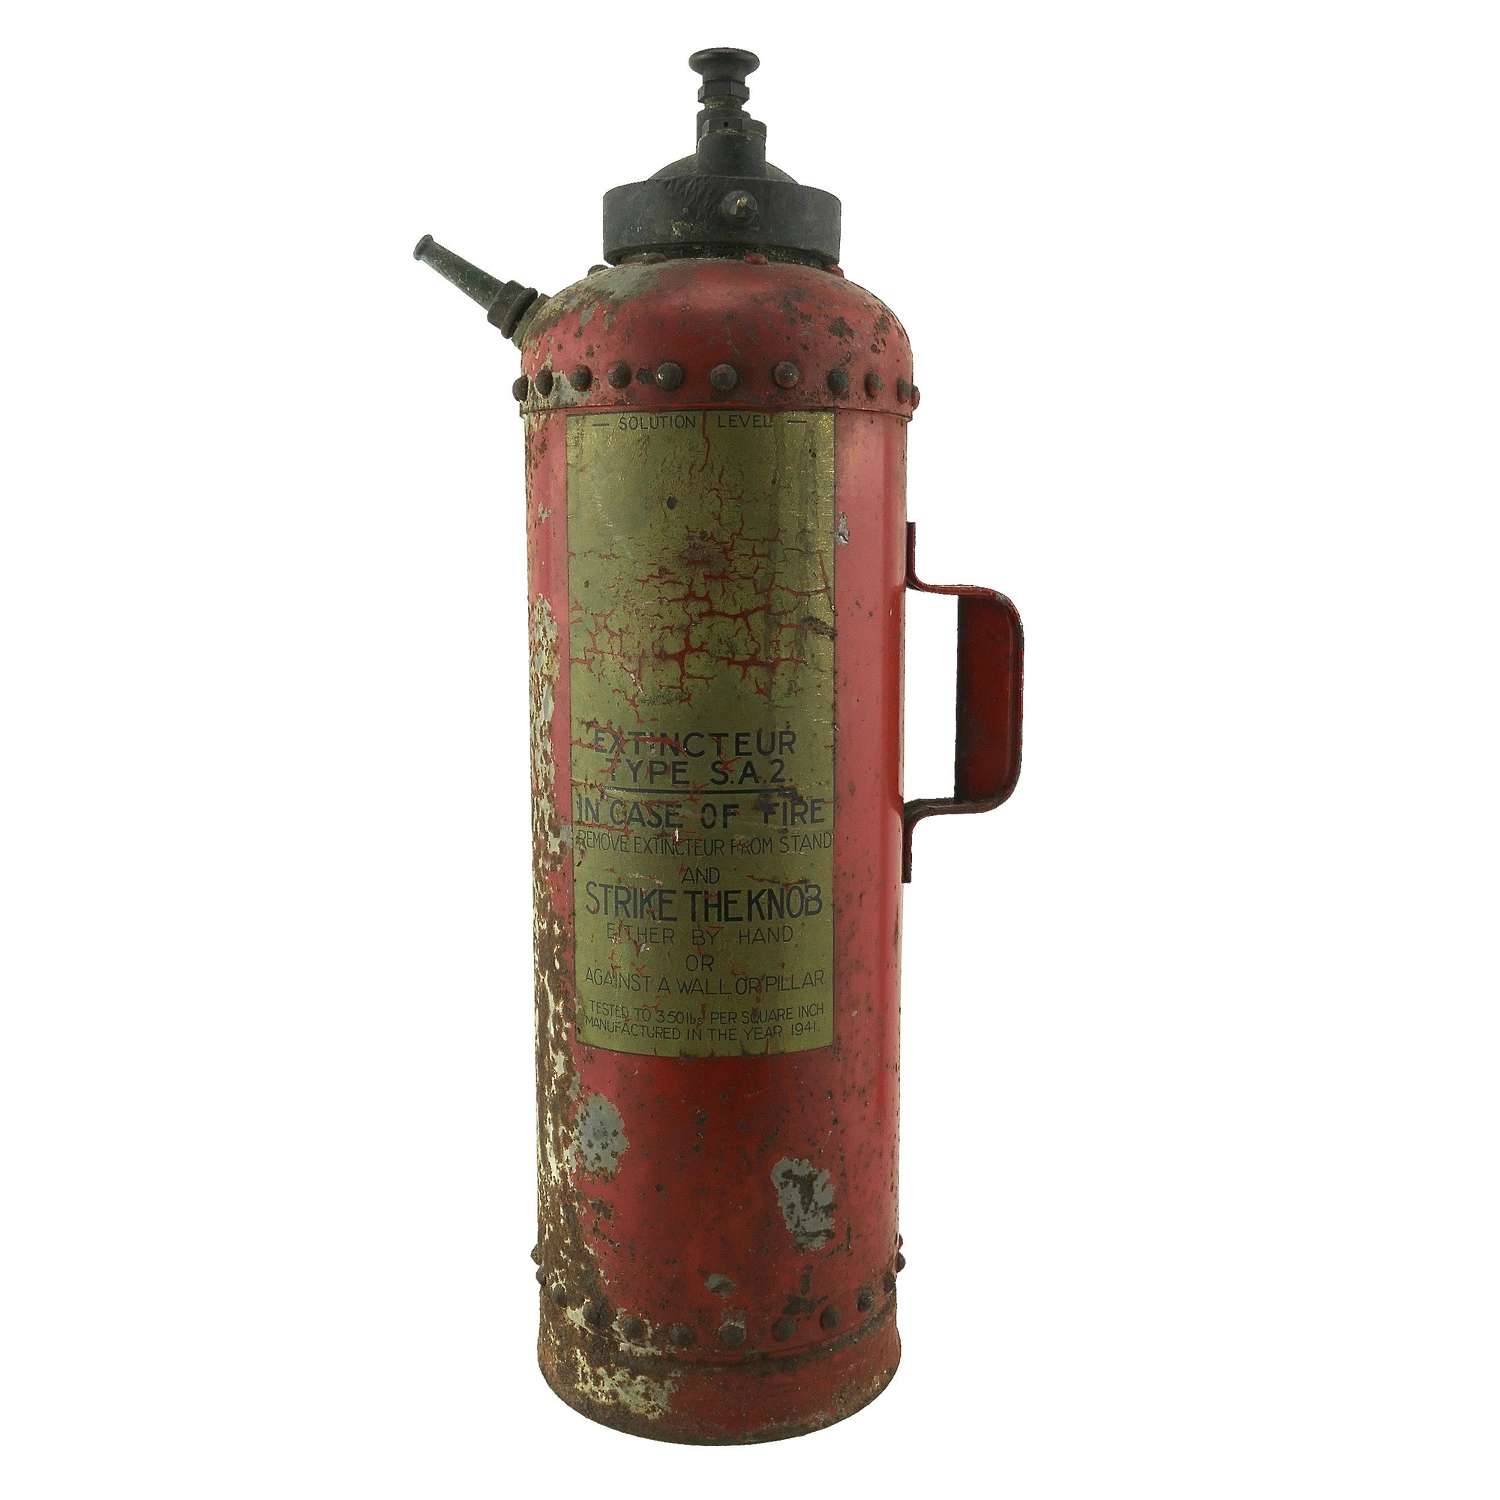 Fire extinguisher c.1941